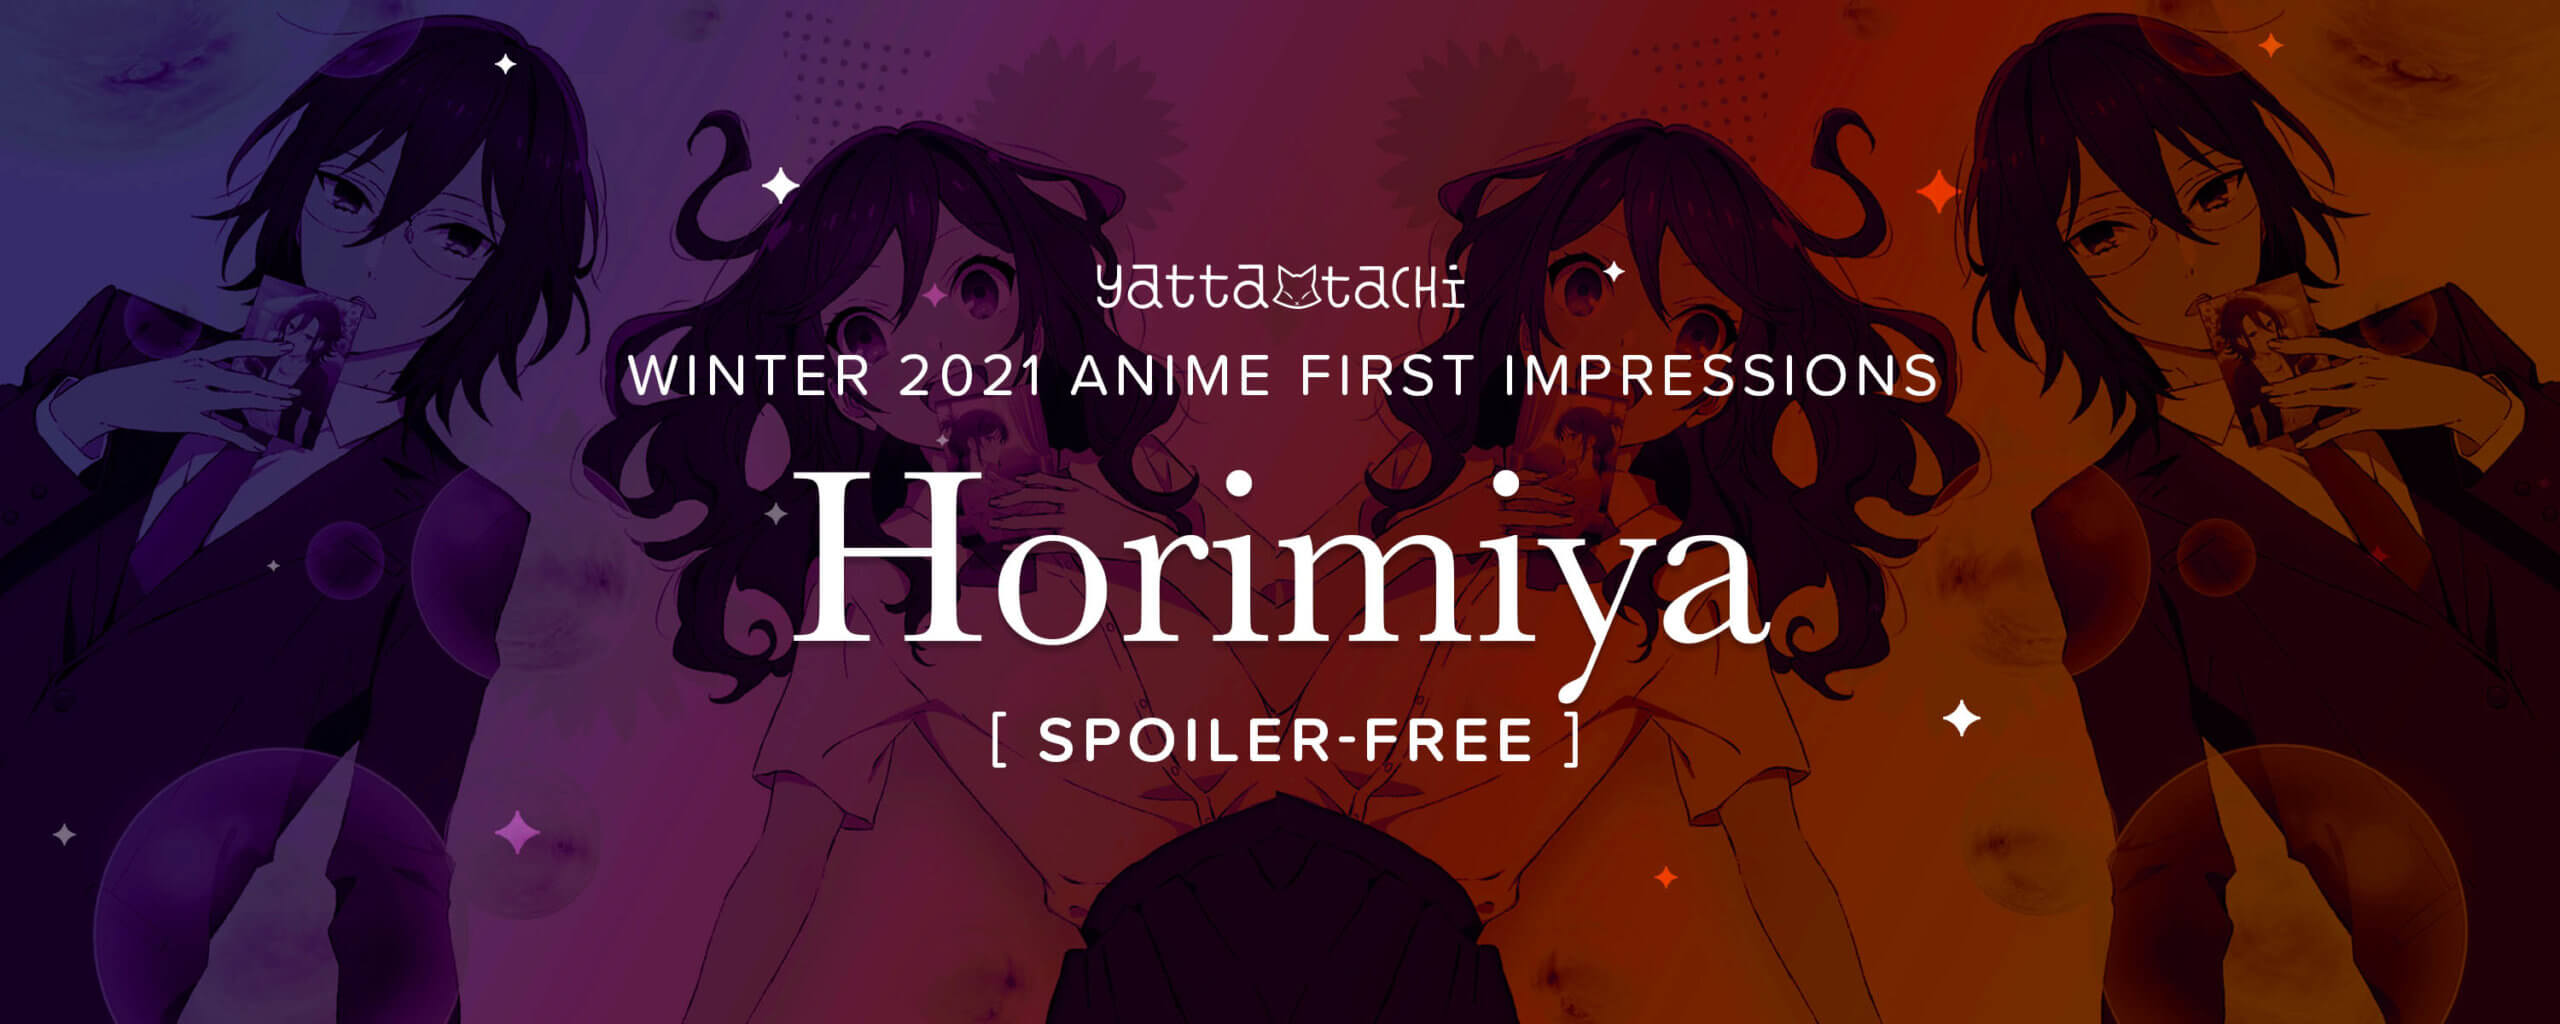 Horimiya review: Best romance anime ever or overrated high school drama? |  by Arius Raposas | Medium